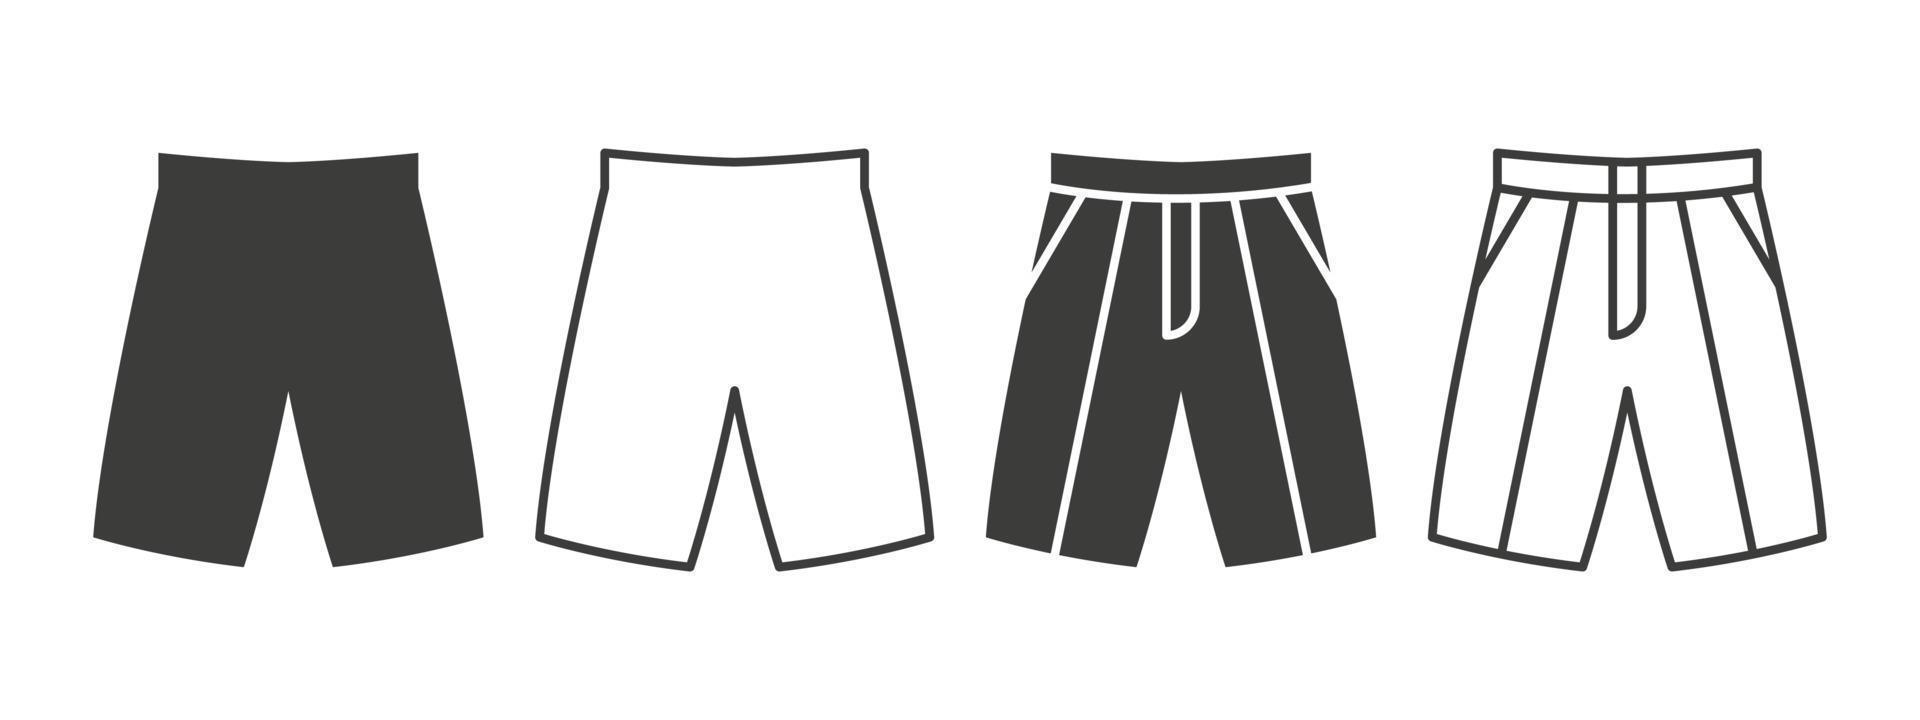 Shorts-Symbole. Hosenshorts in verschiedenen Stilen. Kleidungssymbolkonzept. Vektor-Illustration vektor